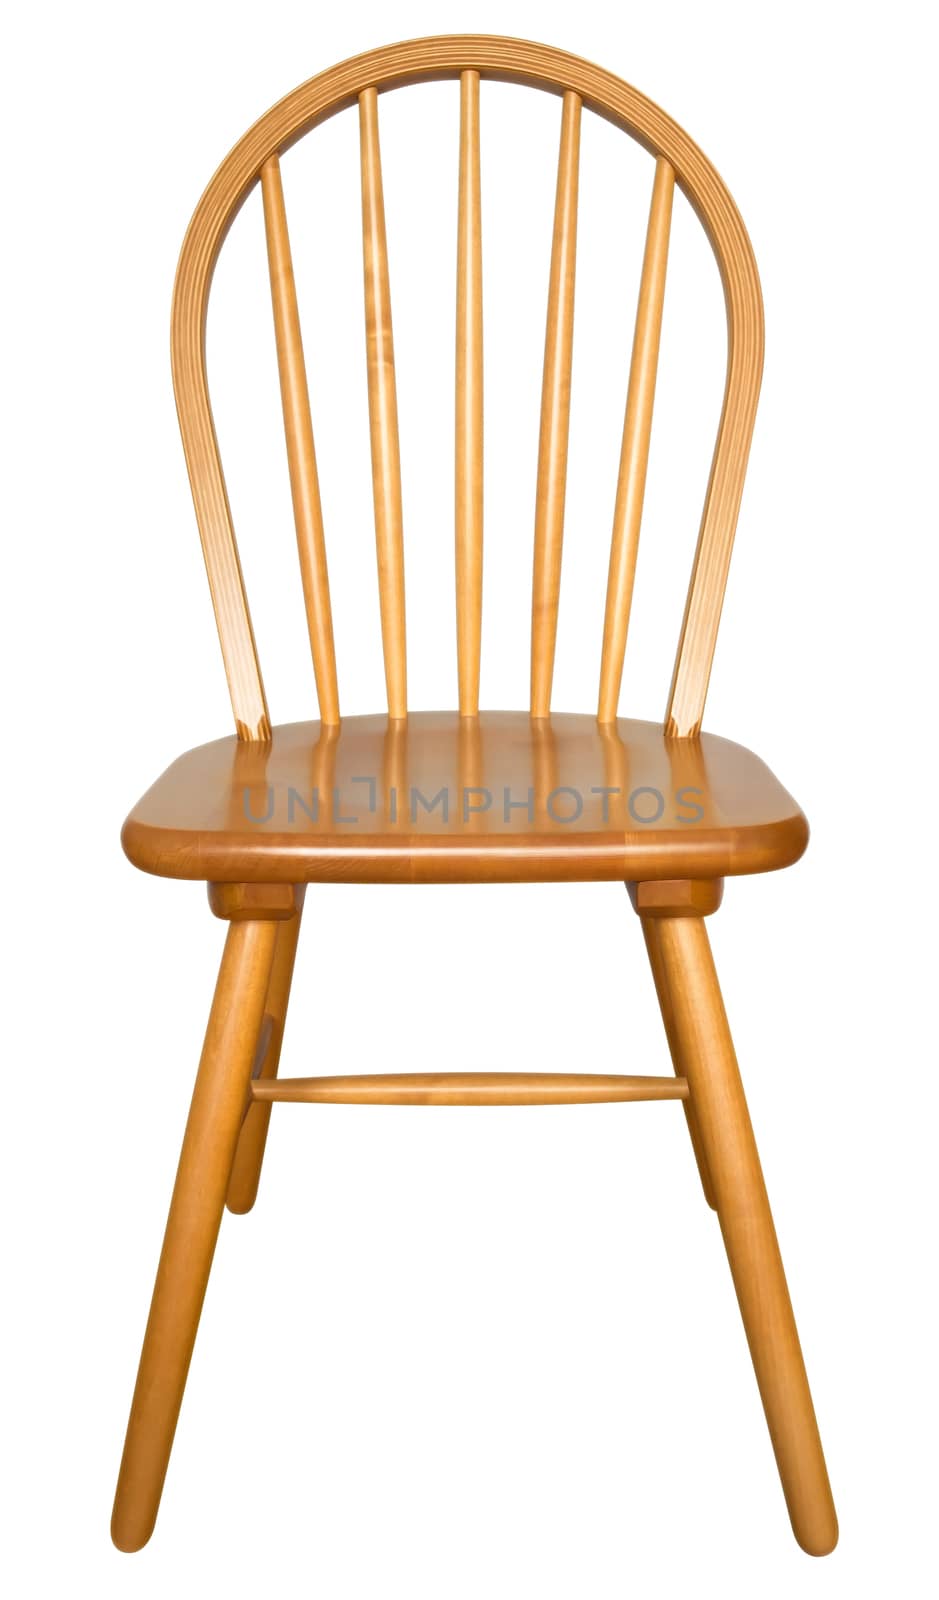 Wooden chair by Venakr